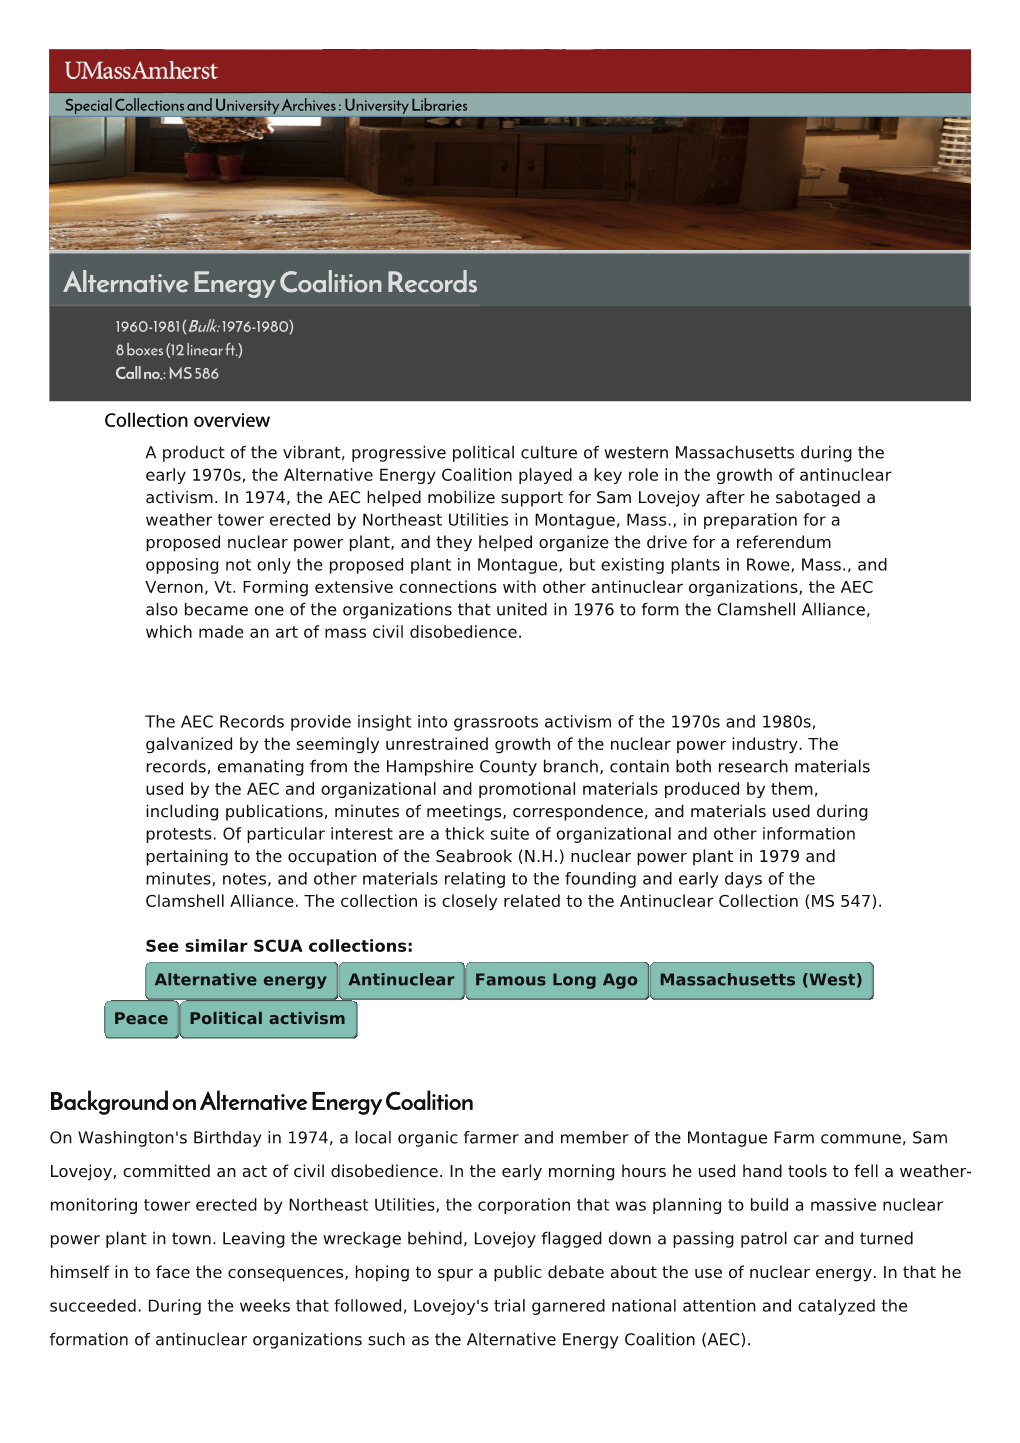 Alternative Energy Coalition Records Finding